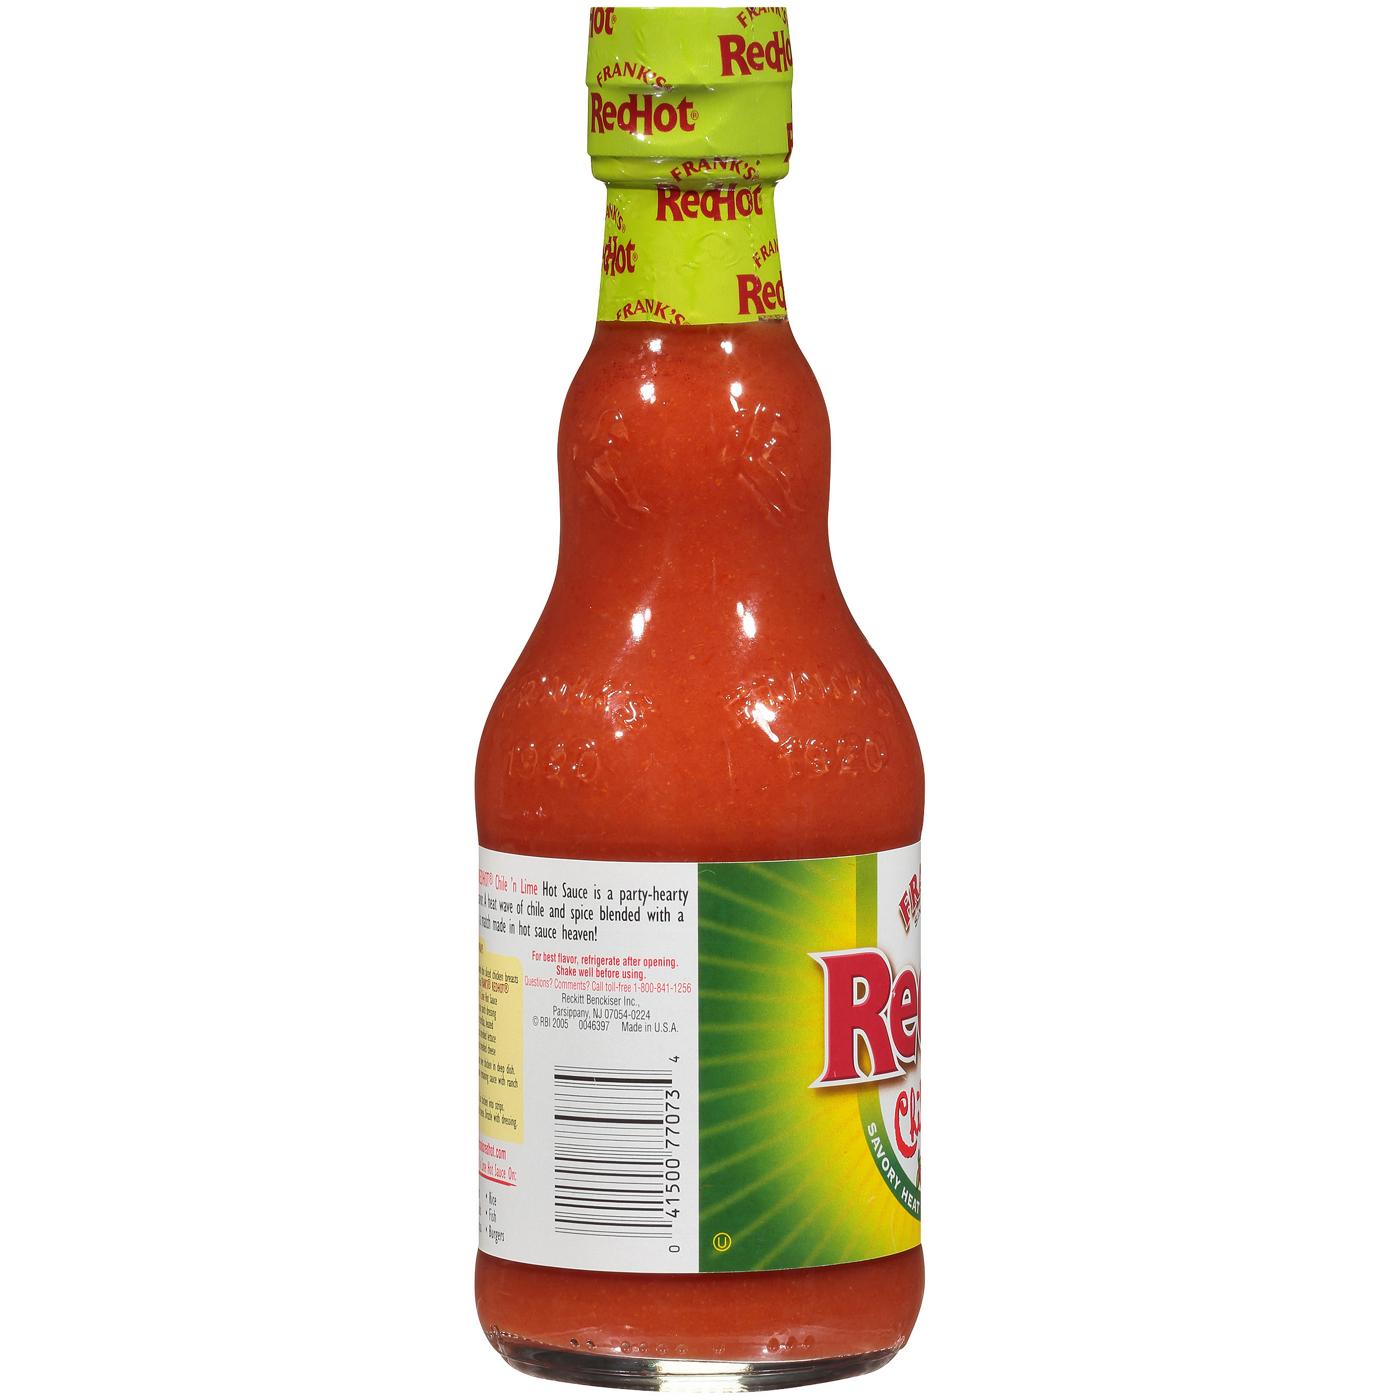 Frank's RedHot Chili 'n Lime Sauce; image 7 of 9